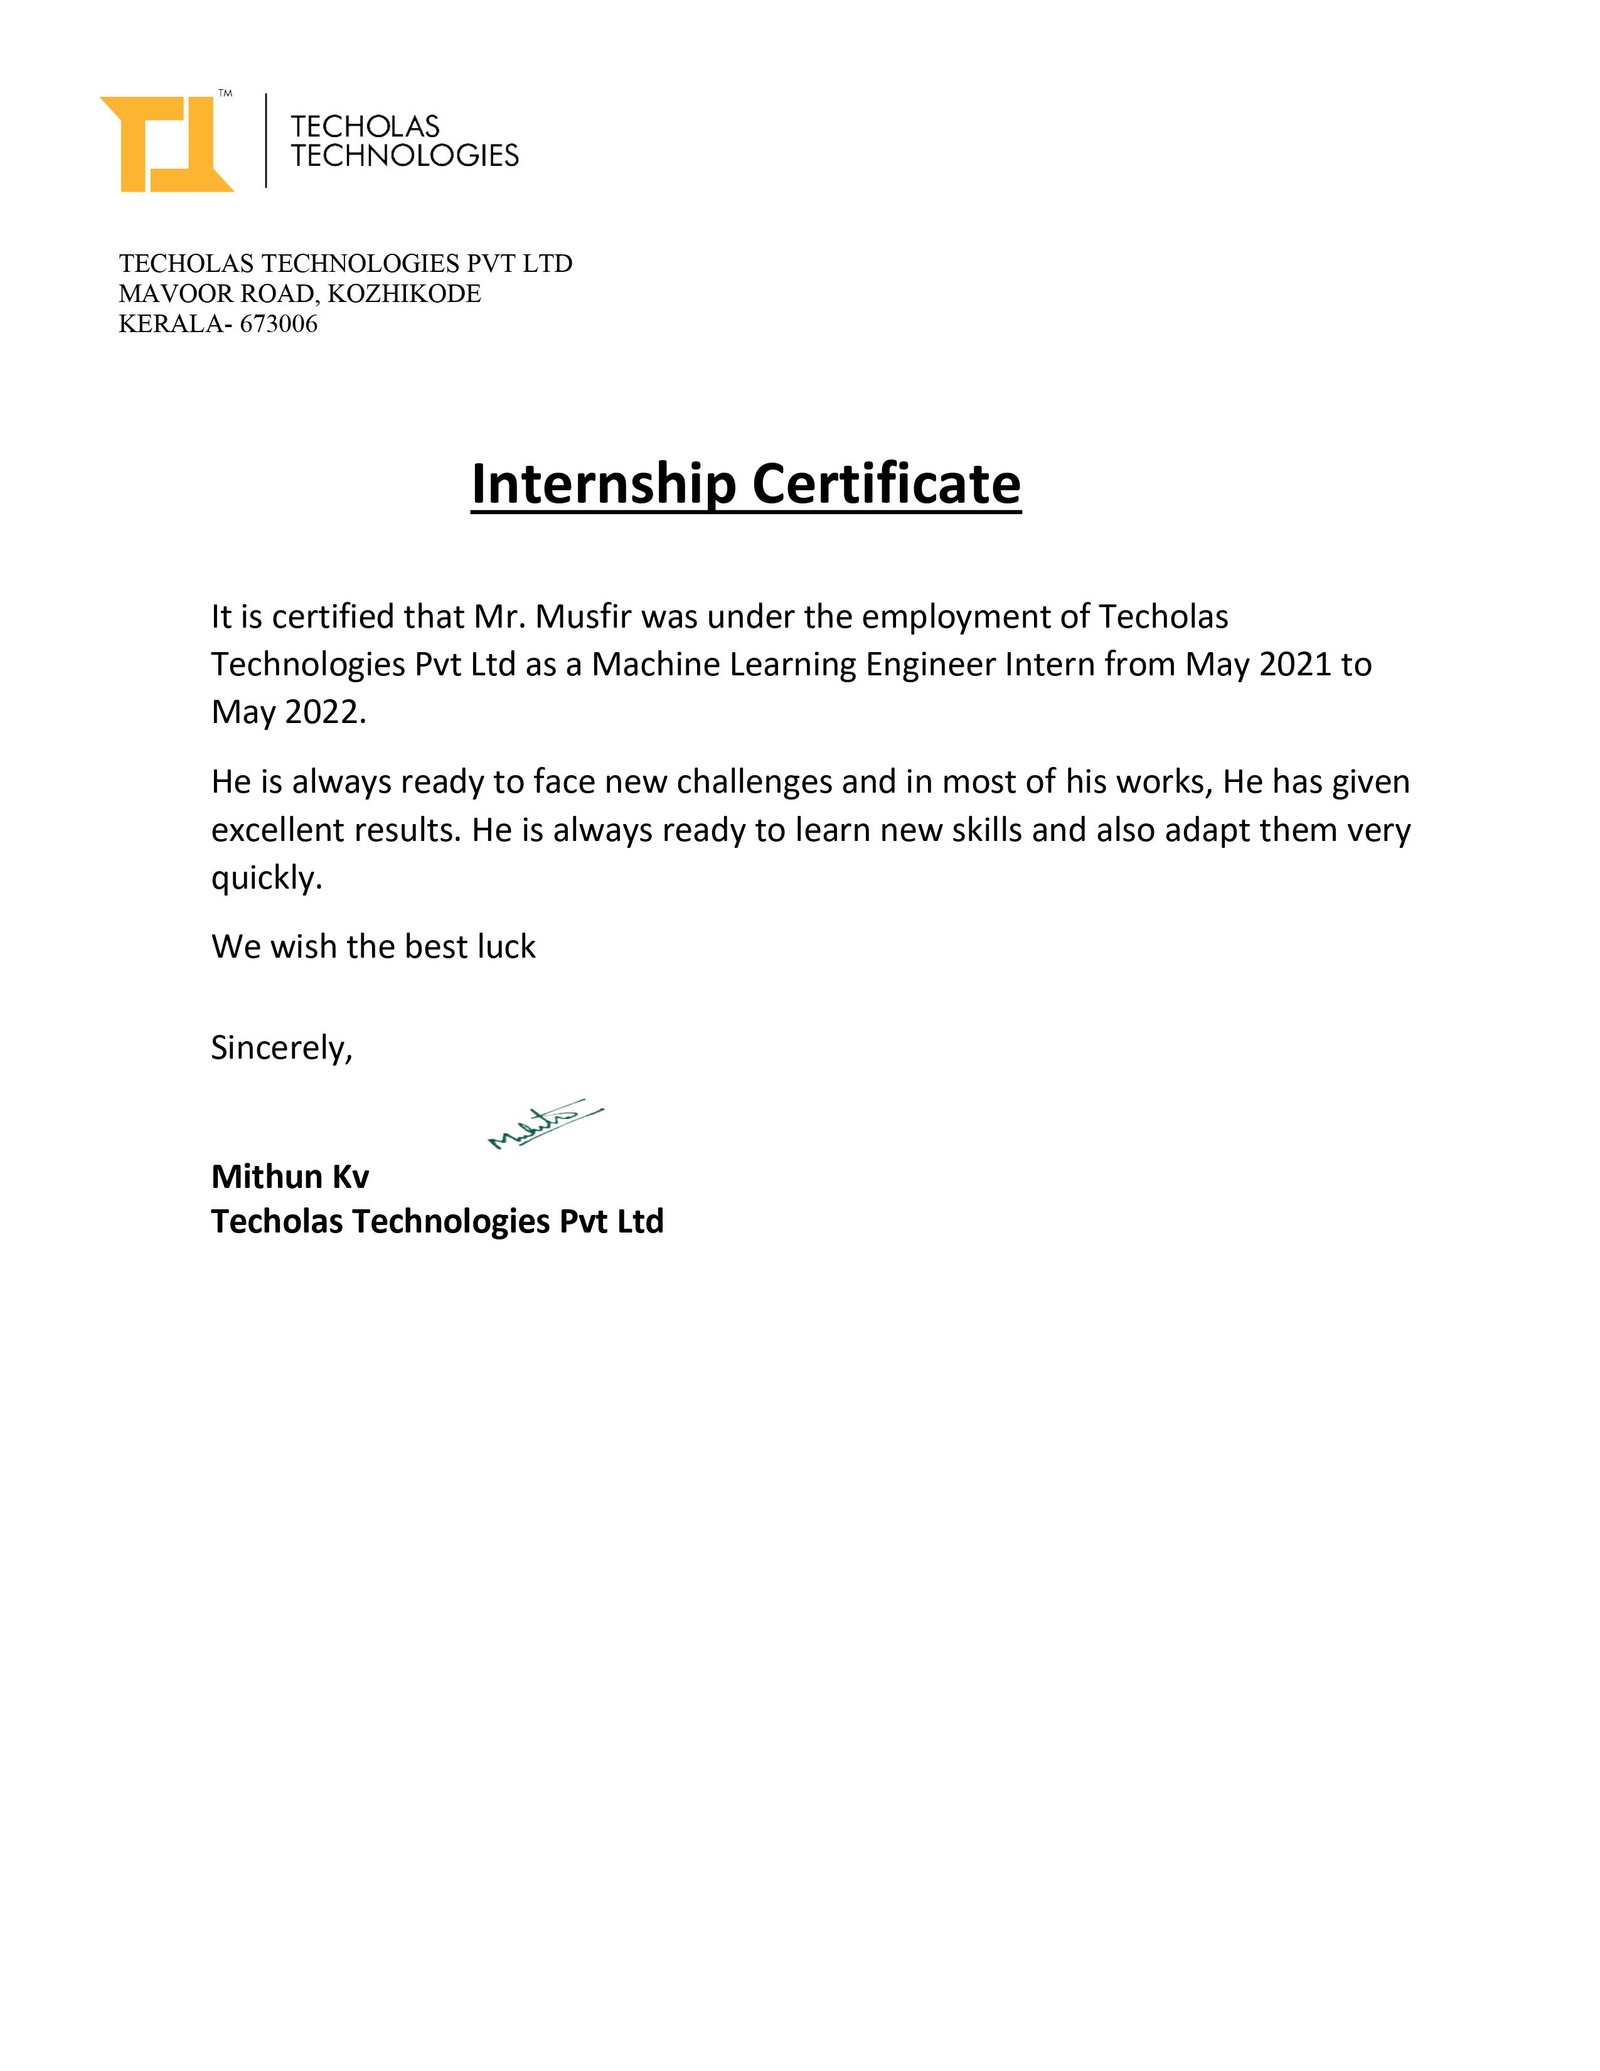 Software Testing Internship Certificate